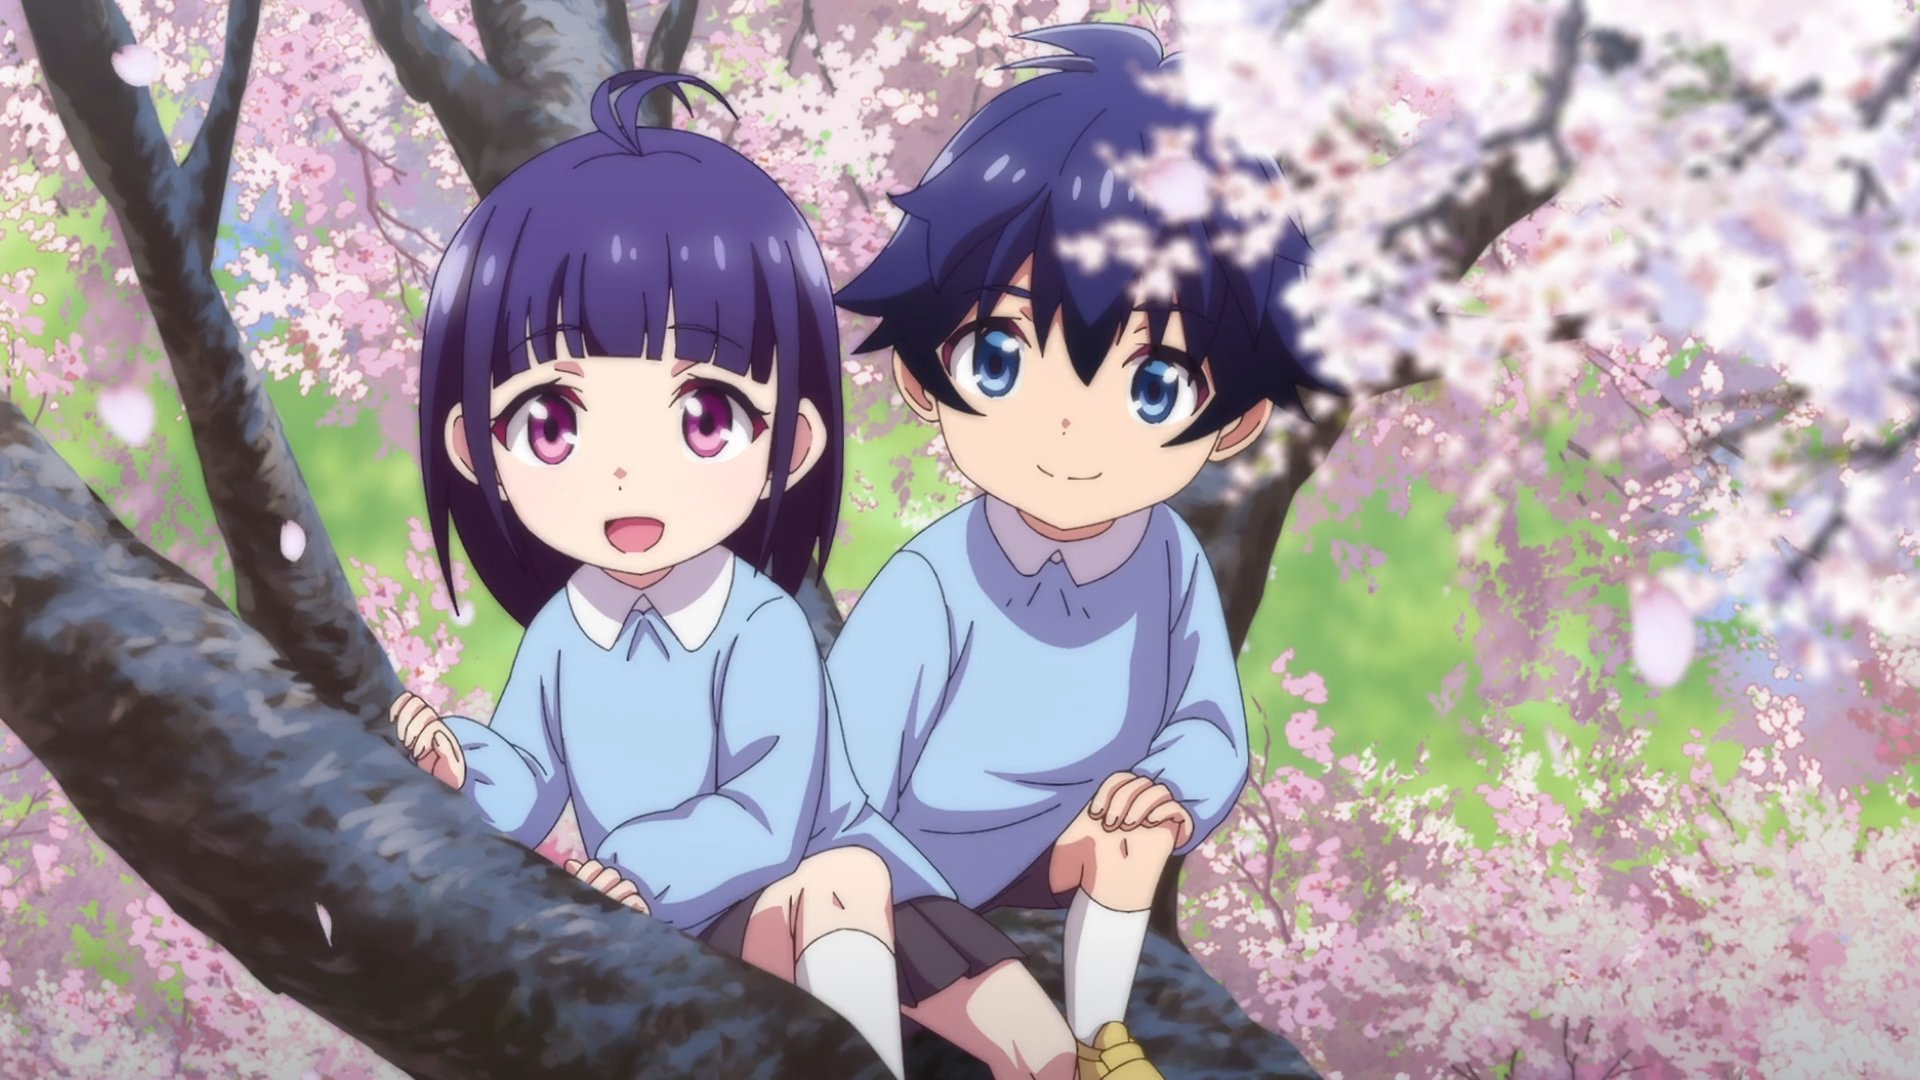 I'm enjoying this show more than I should 💀 #renaiflops #anime